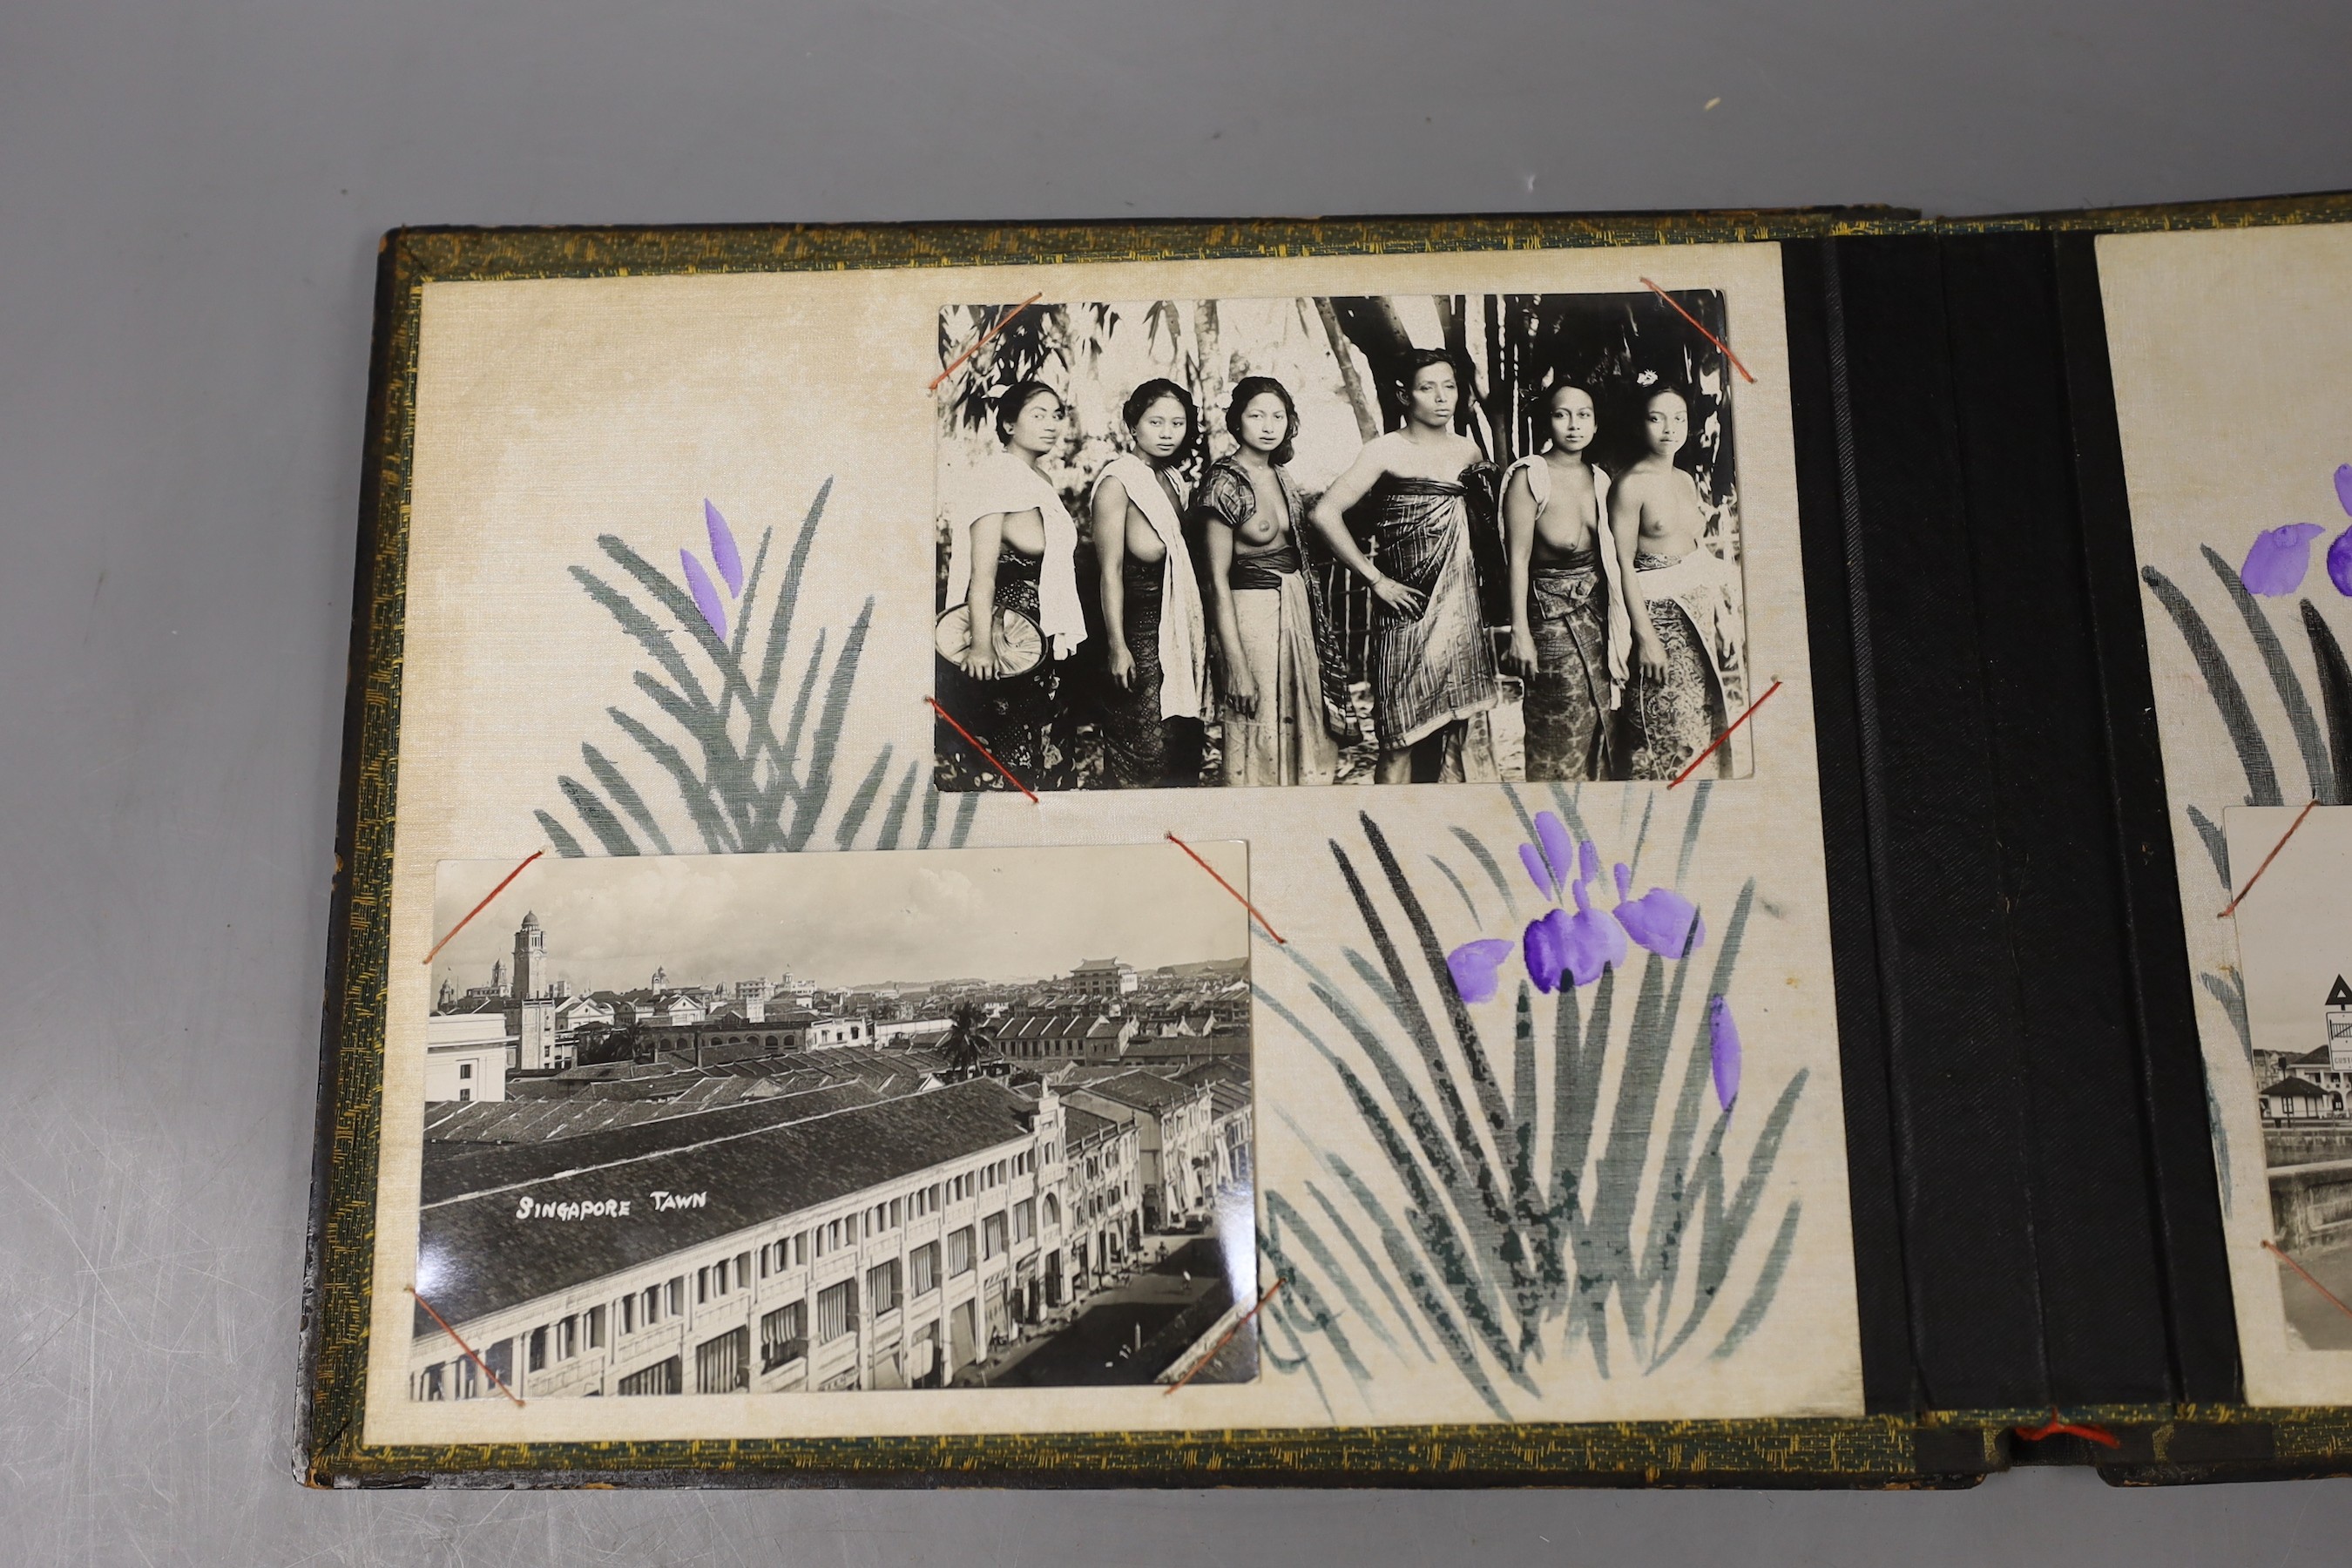 A black lacquer album containing photos of Venice, Penang and China